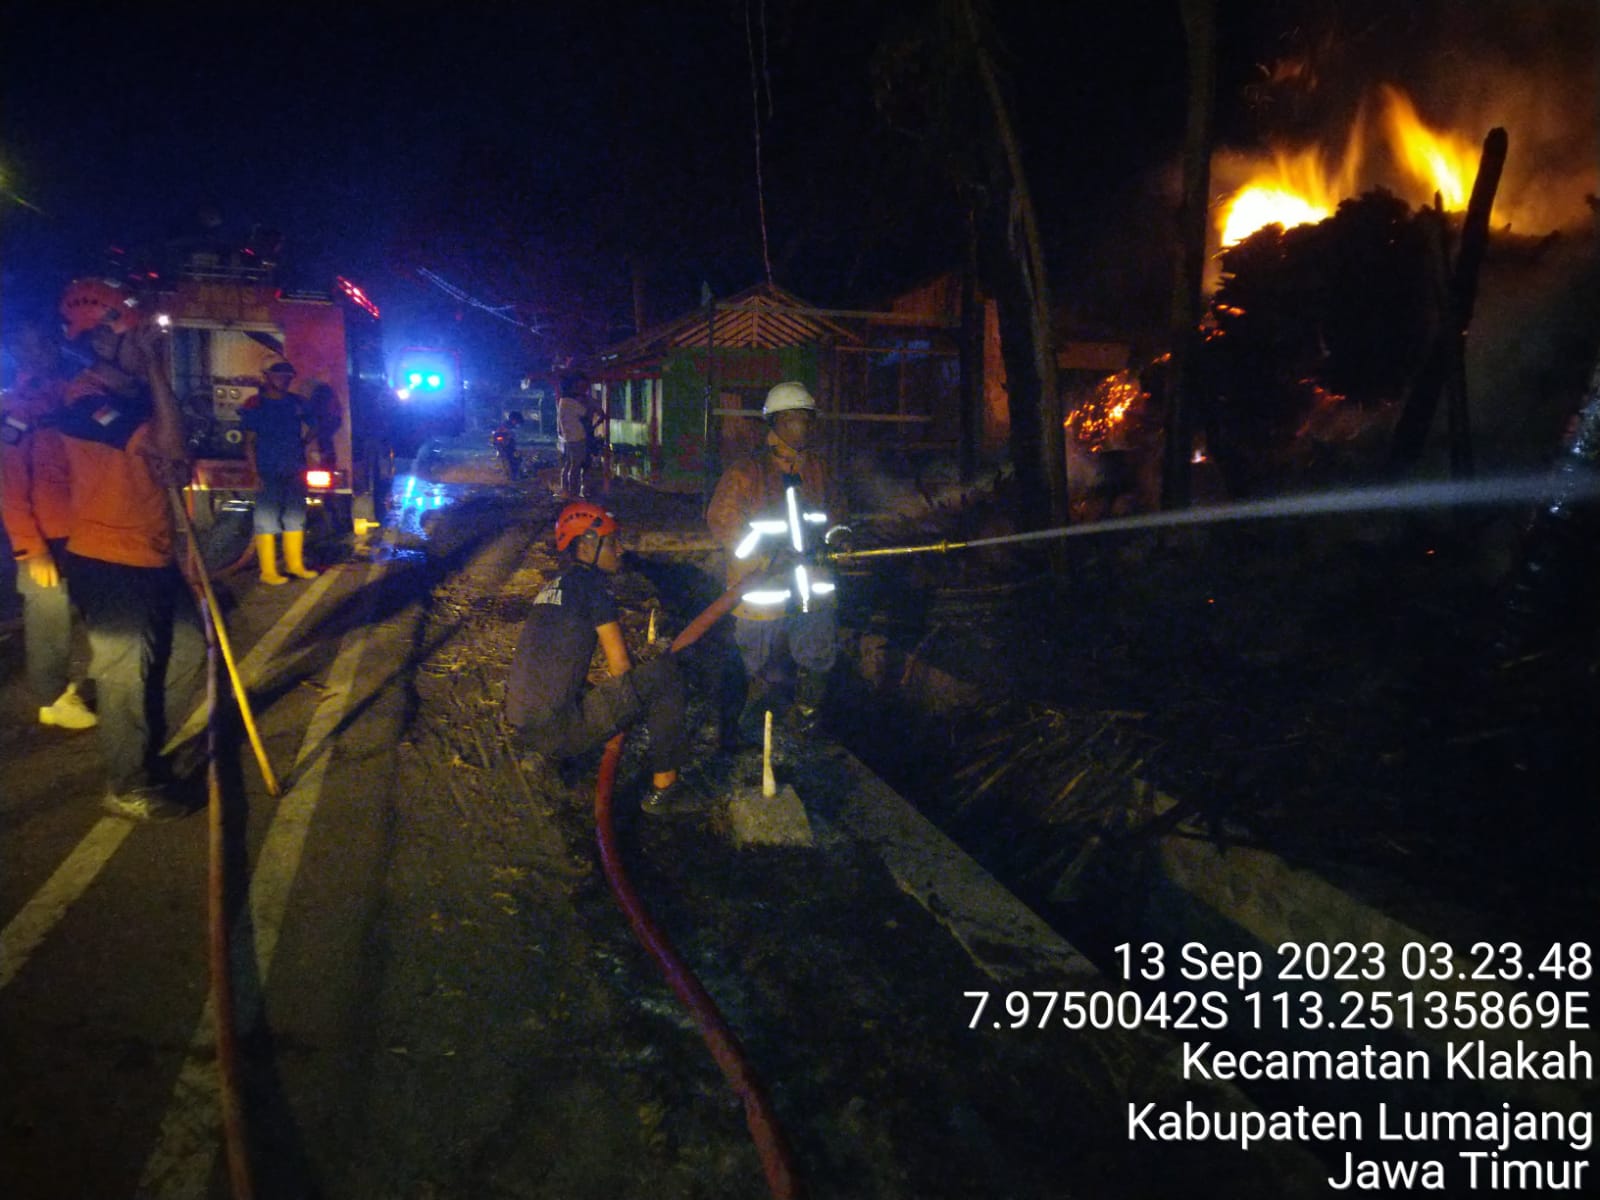 Penanganan Kebakaran Limbah Kayu UD. Candrawood di Dusun Linduboyo RT/RW 01/01 Desa Klakah Kecamatan Klakah